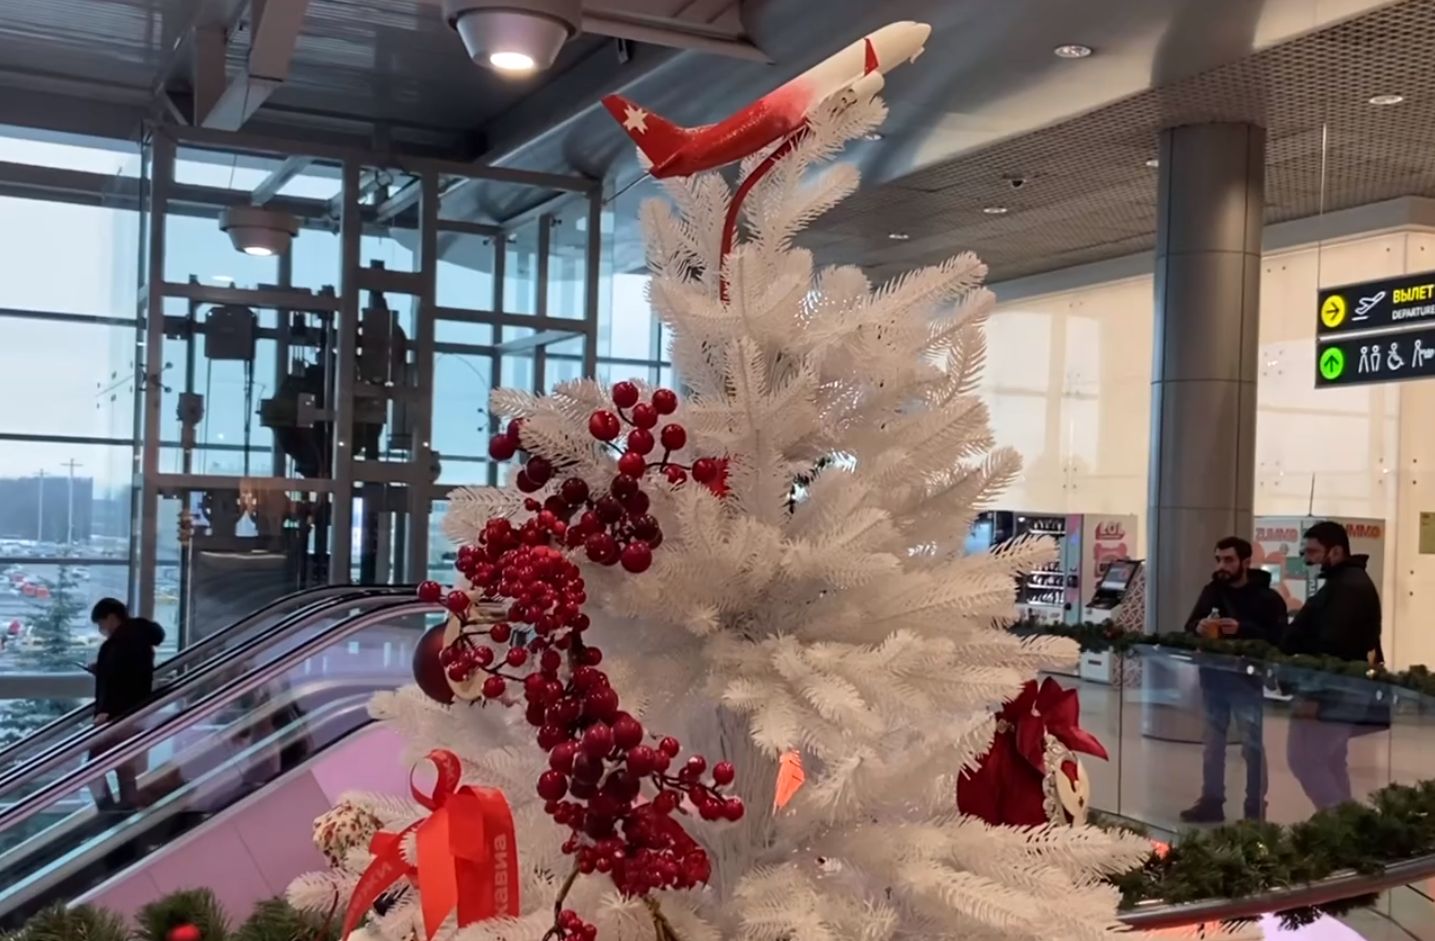 

Новогоднюю елку в цветах флага Удмуртии установили в аэропорту Домодедово

